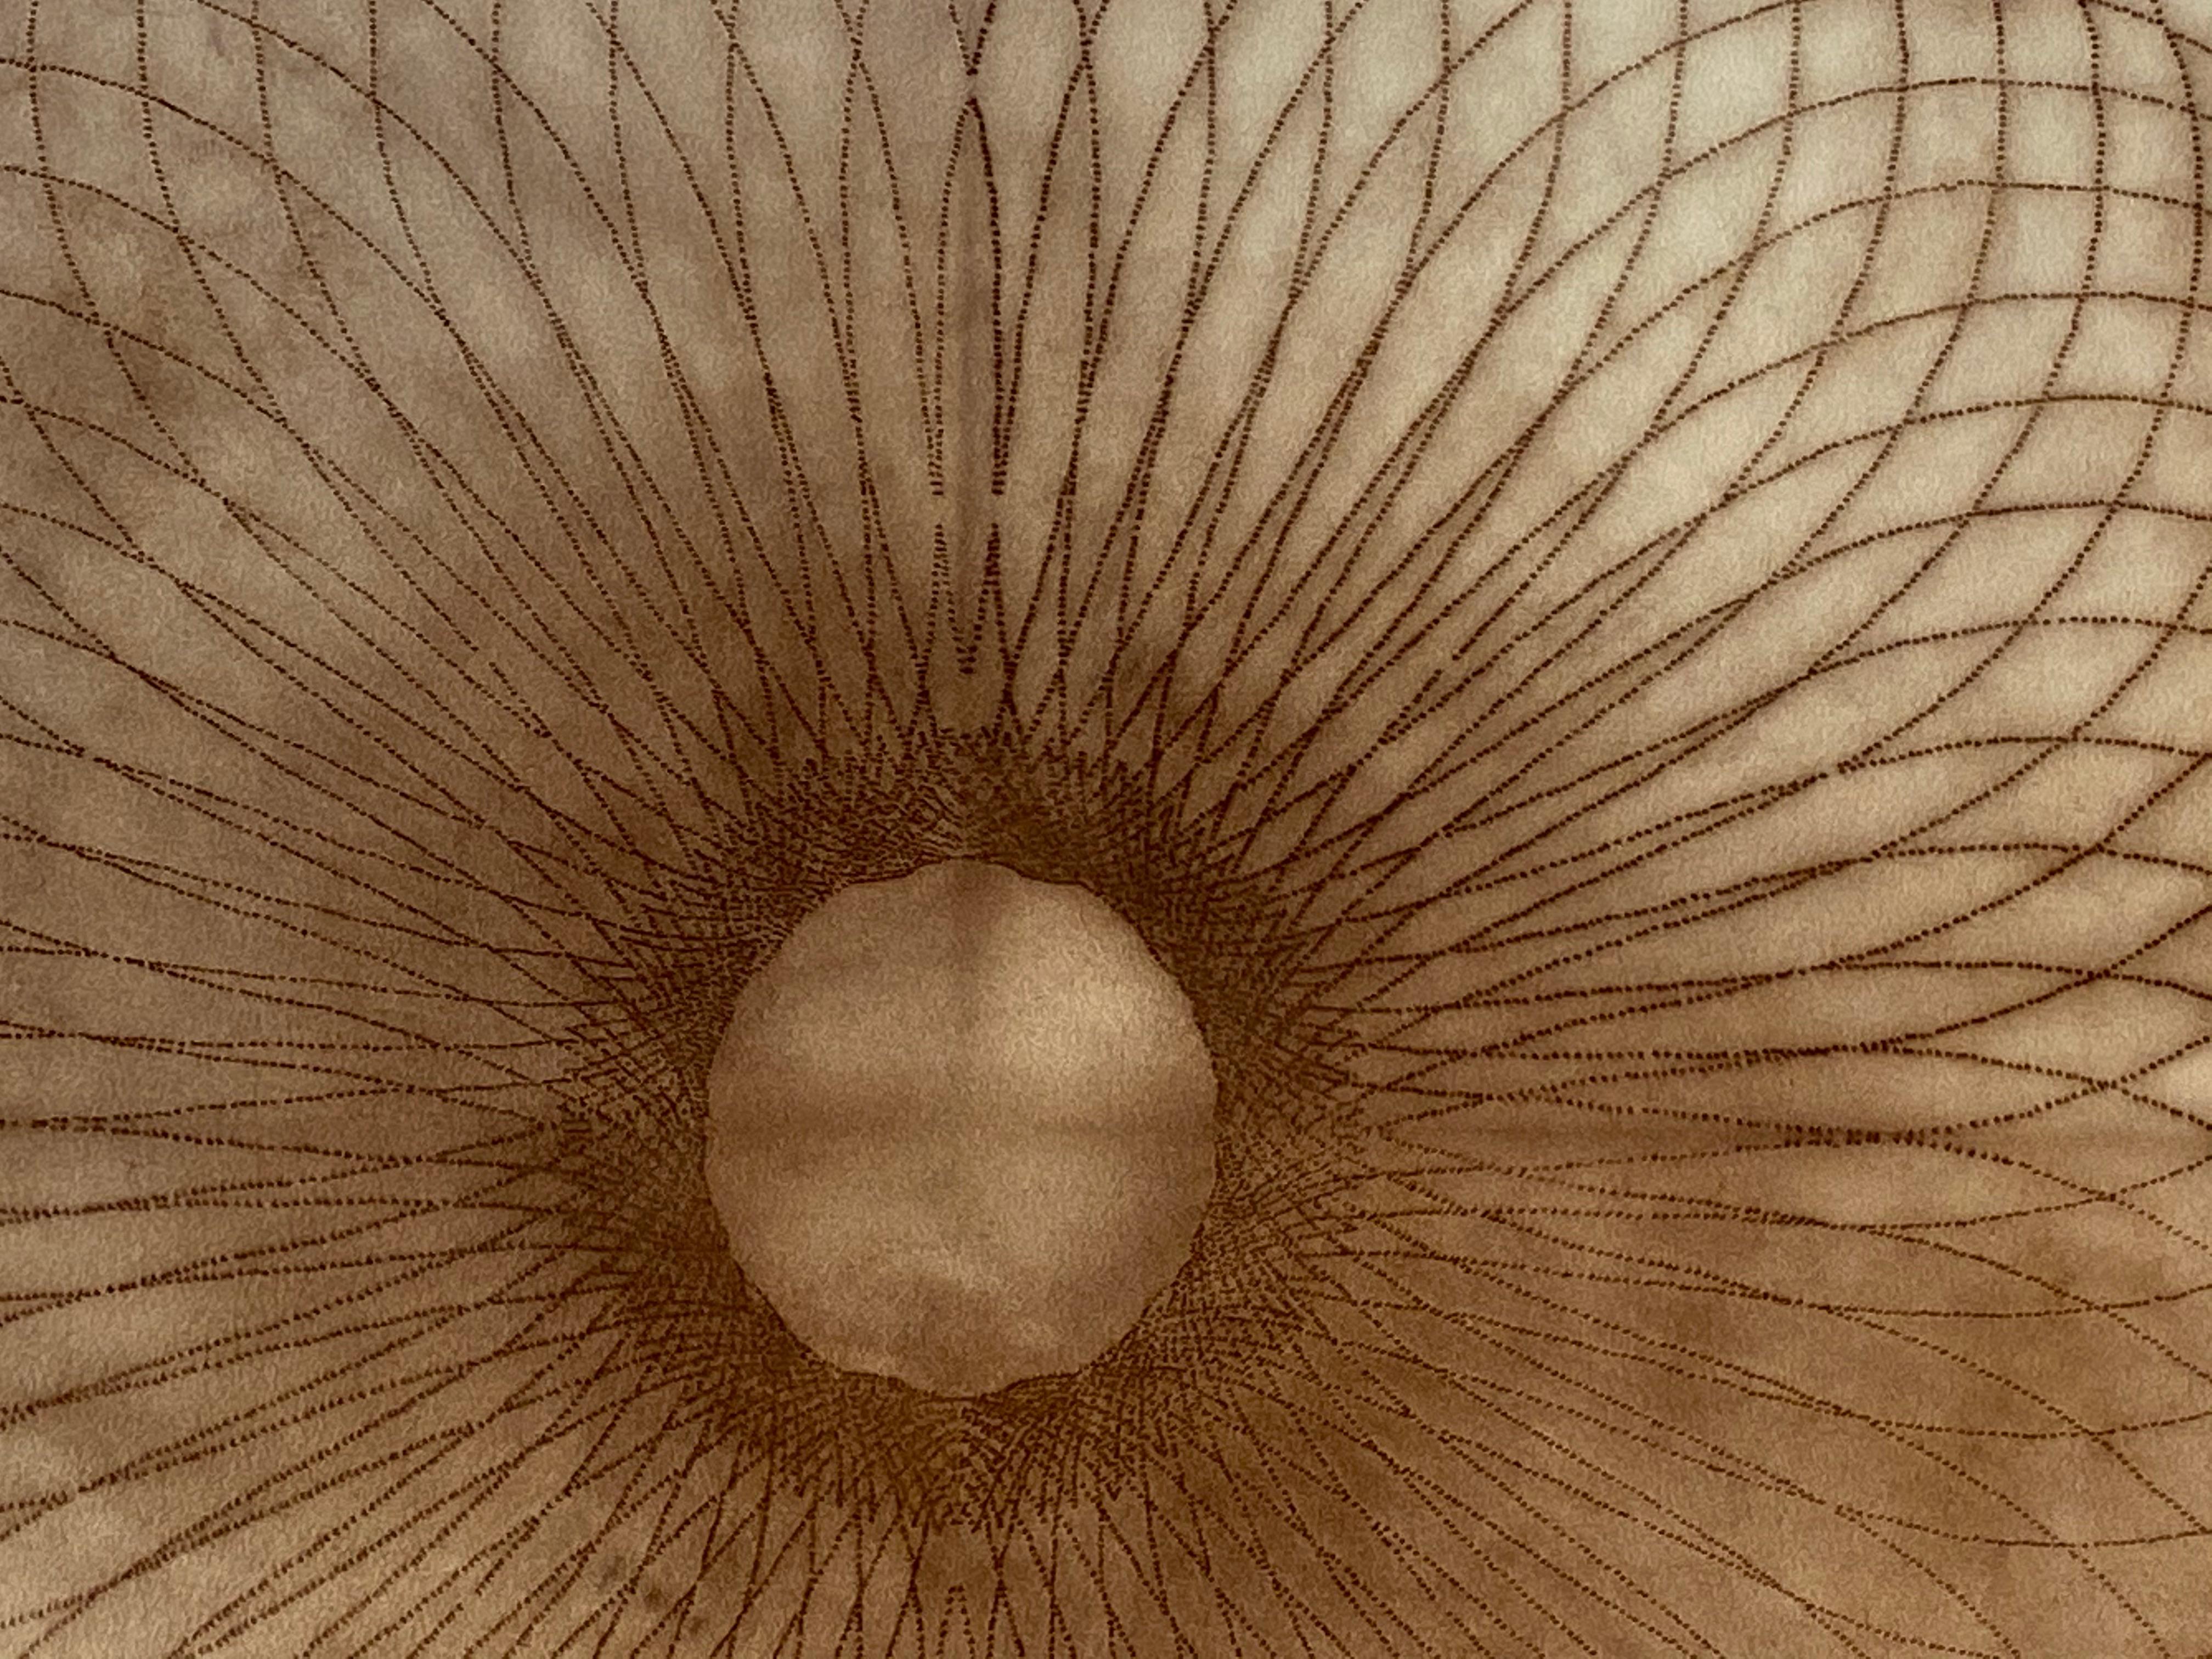 Exotic Hex Series 12 01, Square Reddish Brown Circular Mandala Line Drawing - Contemporary Art by Mary Judge